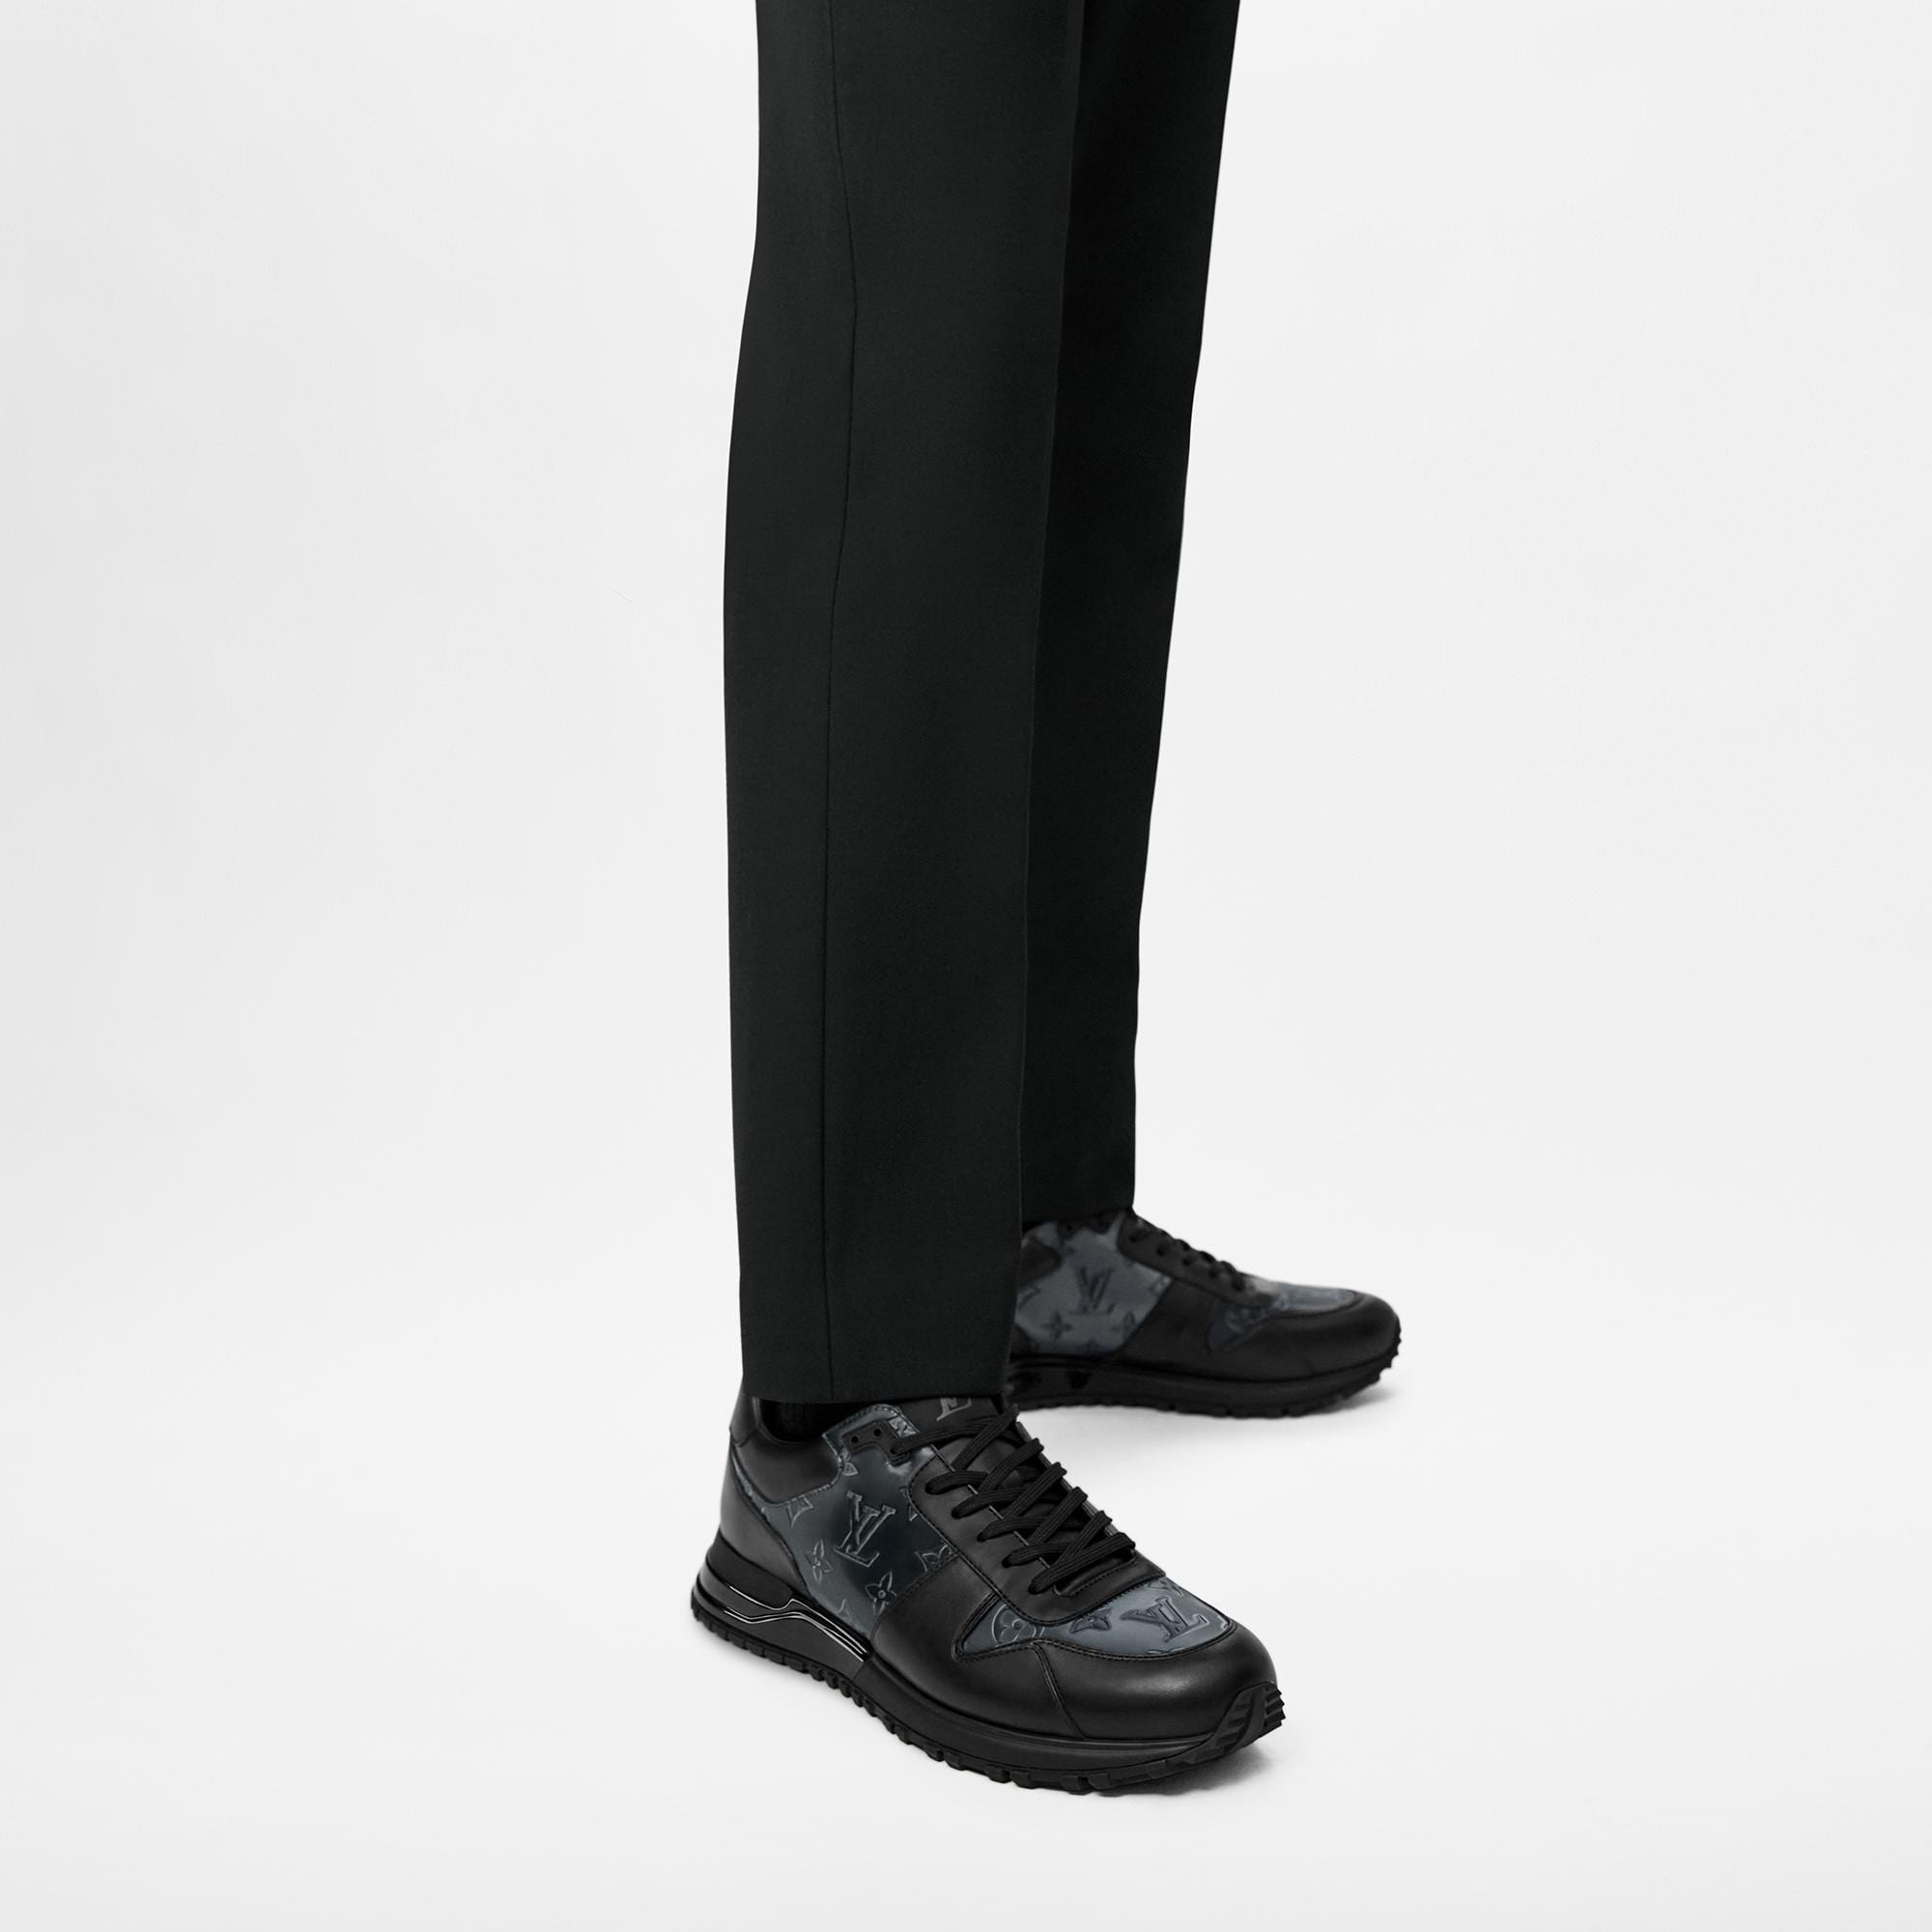 Addiction generation angle Louis Vuitton Run Away Sneaker - Men - Shoes 1A8KJ8 Black - $130.80 -  Pursebest.com